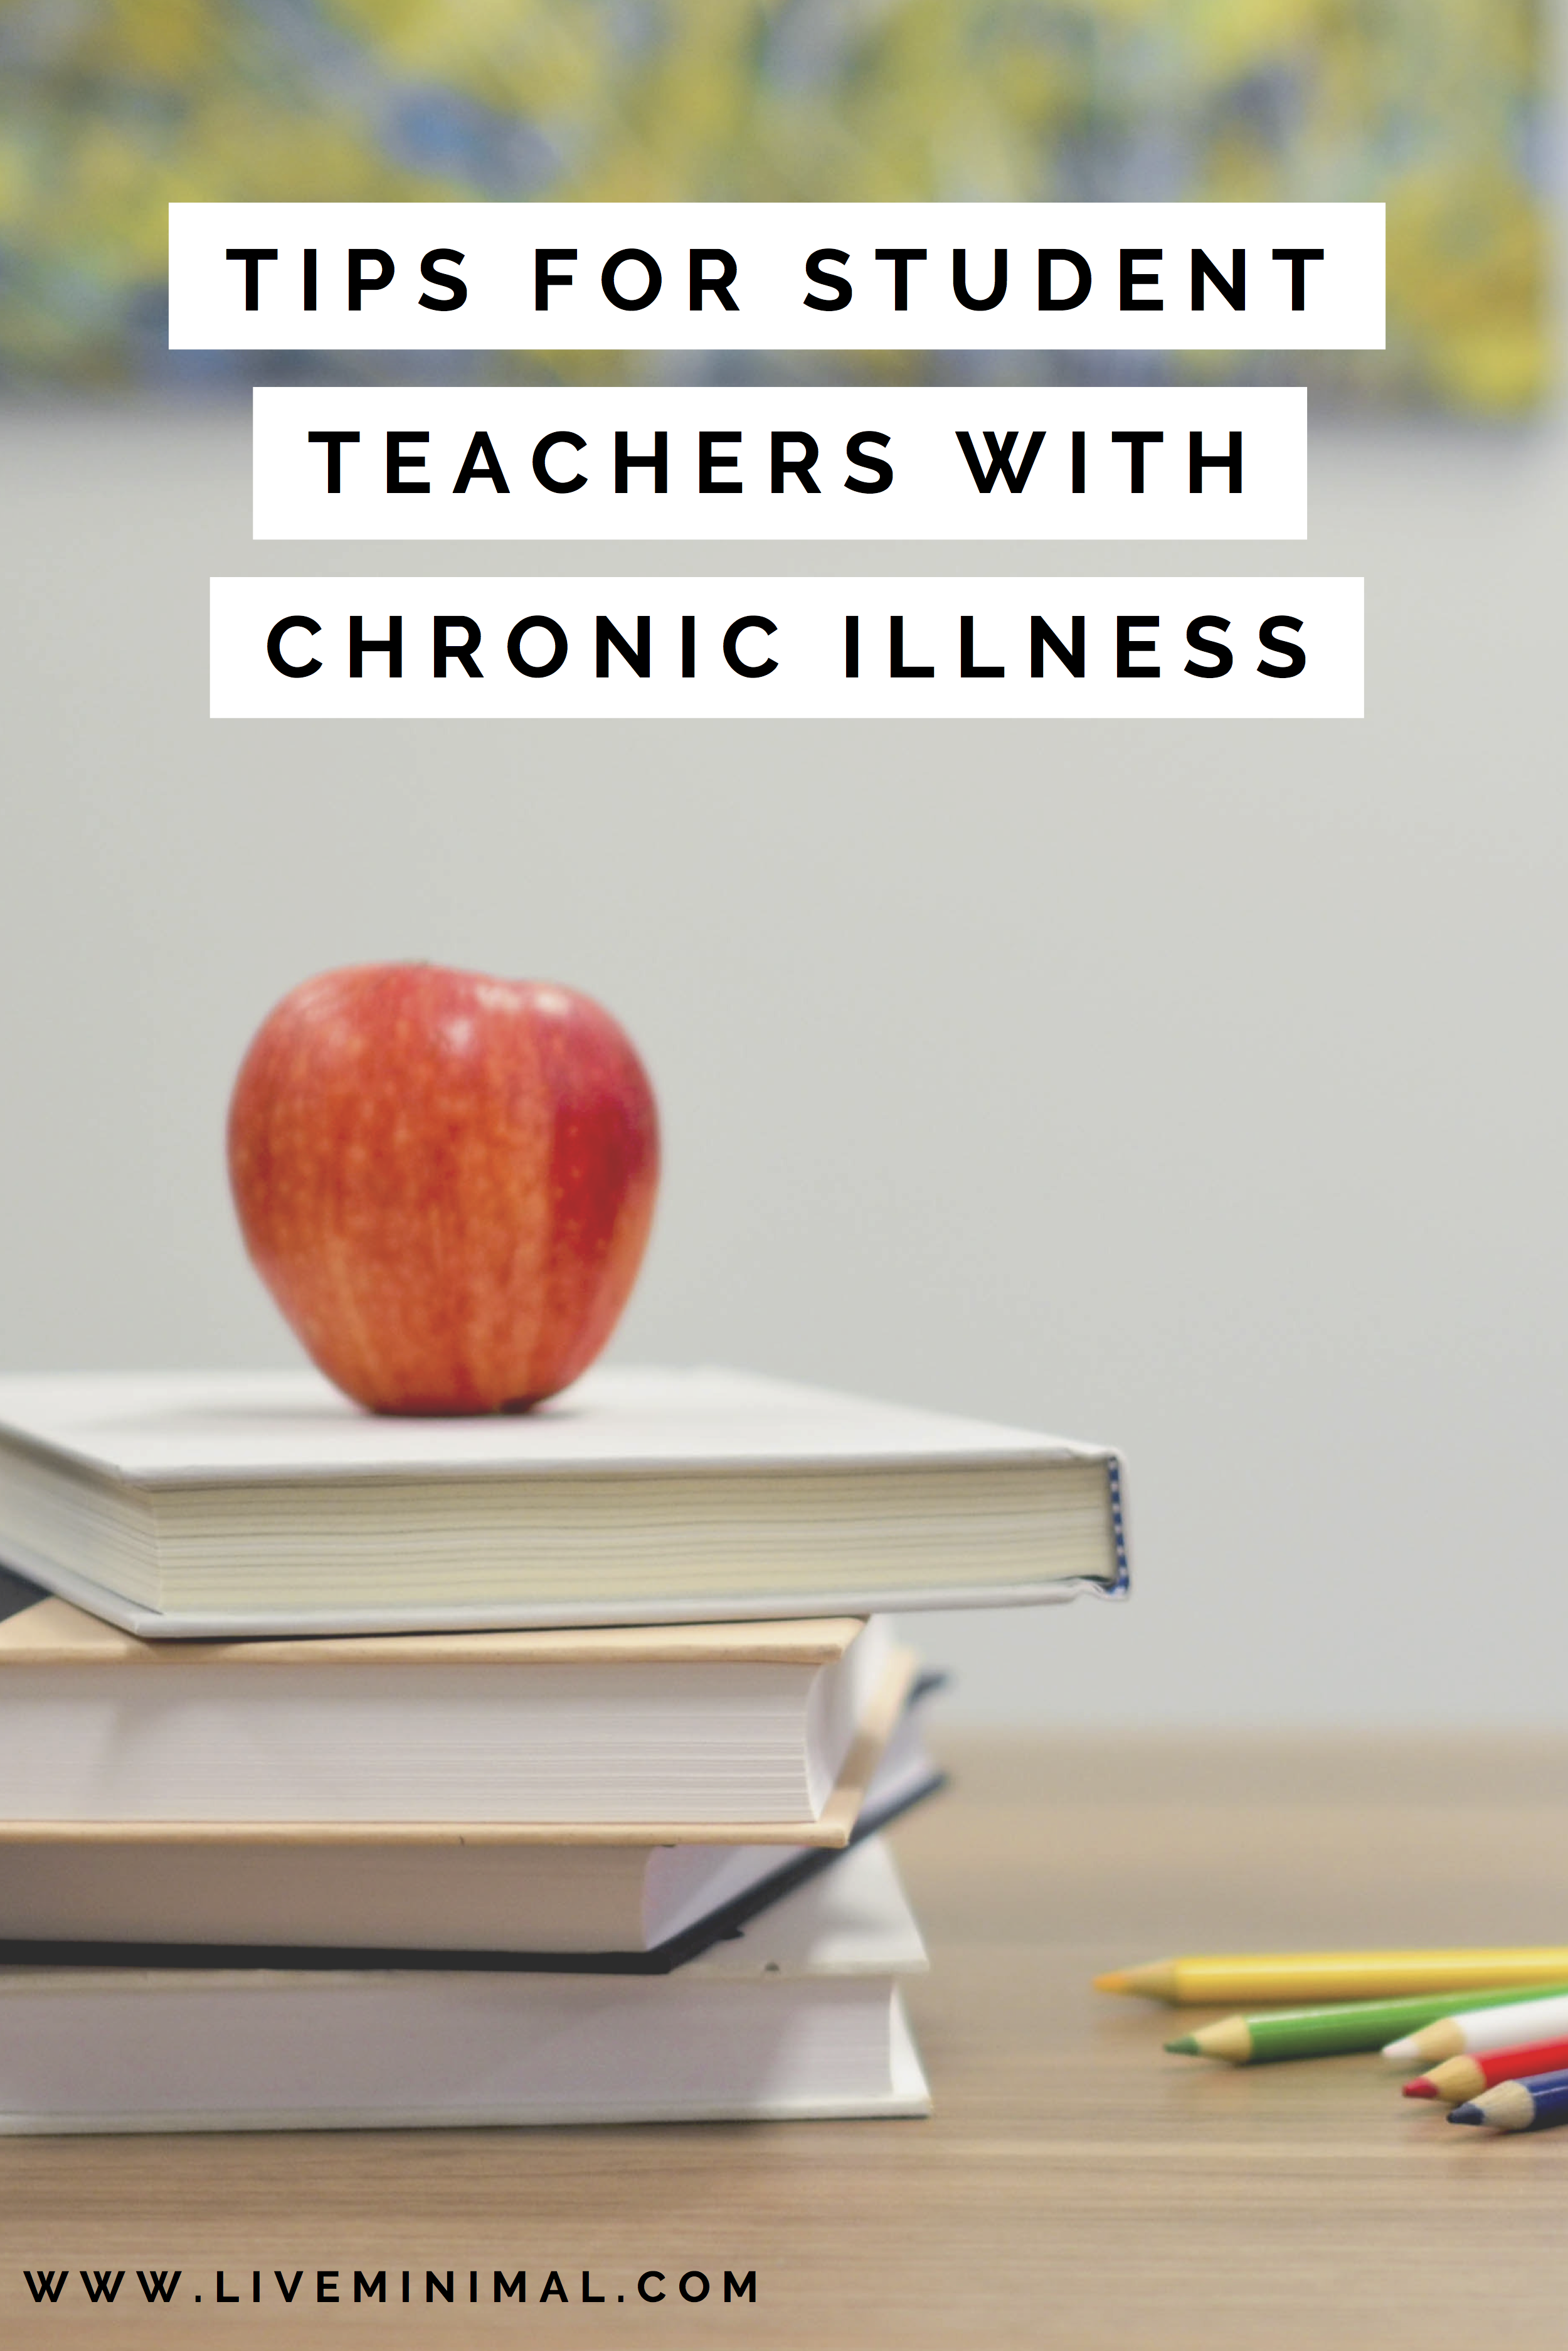 Tips for student teachers with chronic illness